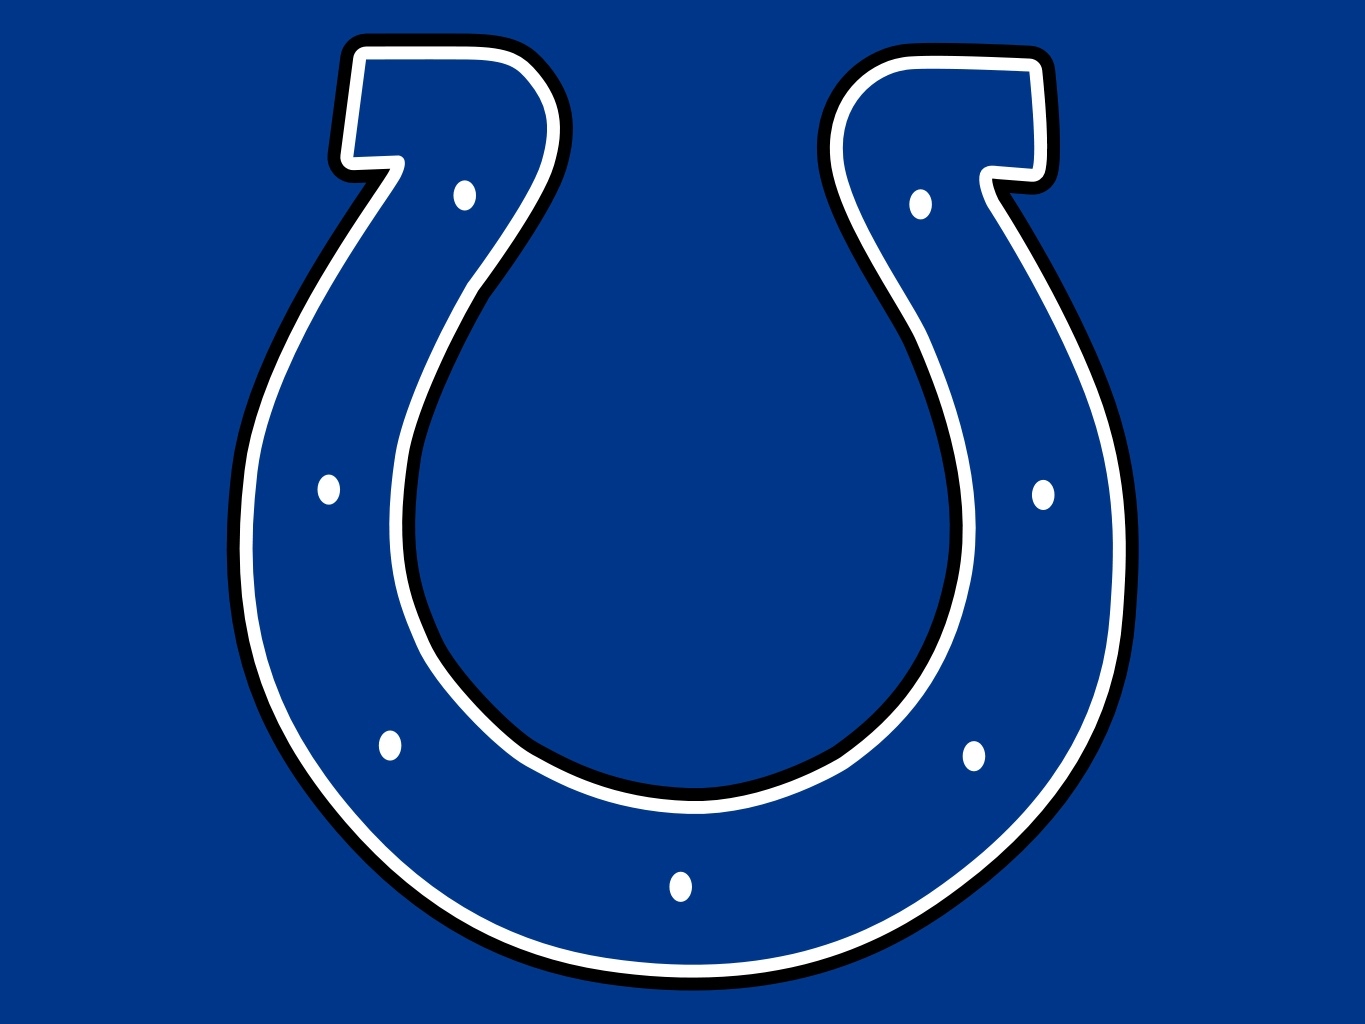 Indianapolis_Colts2.jpg